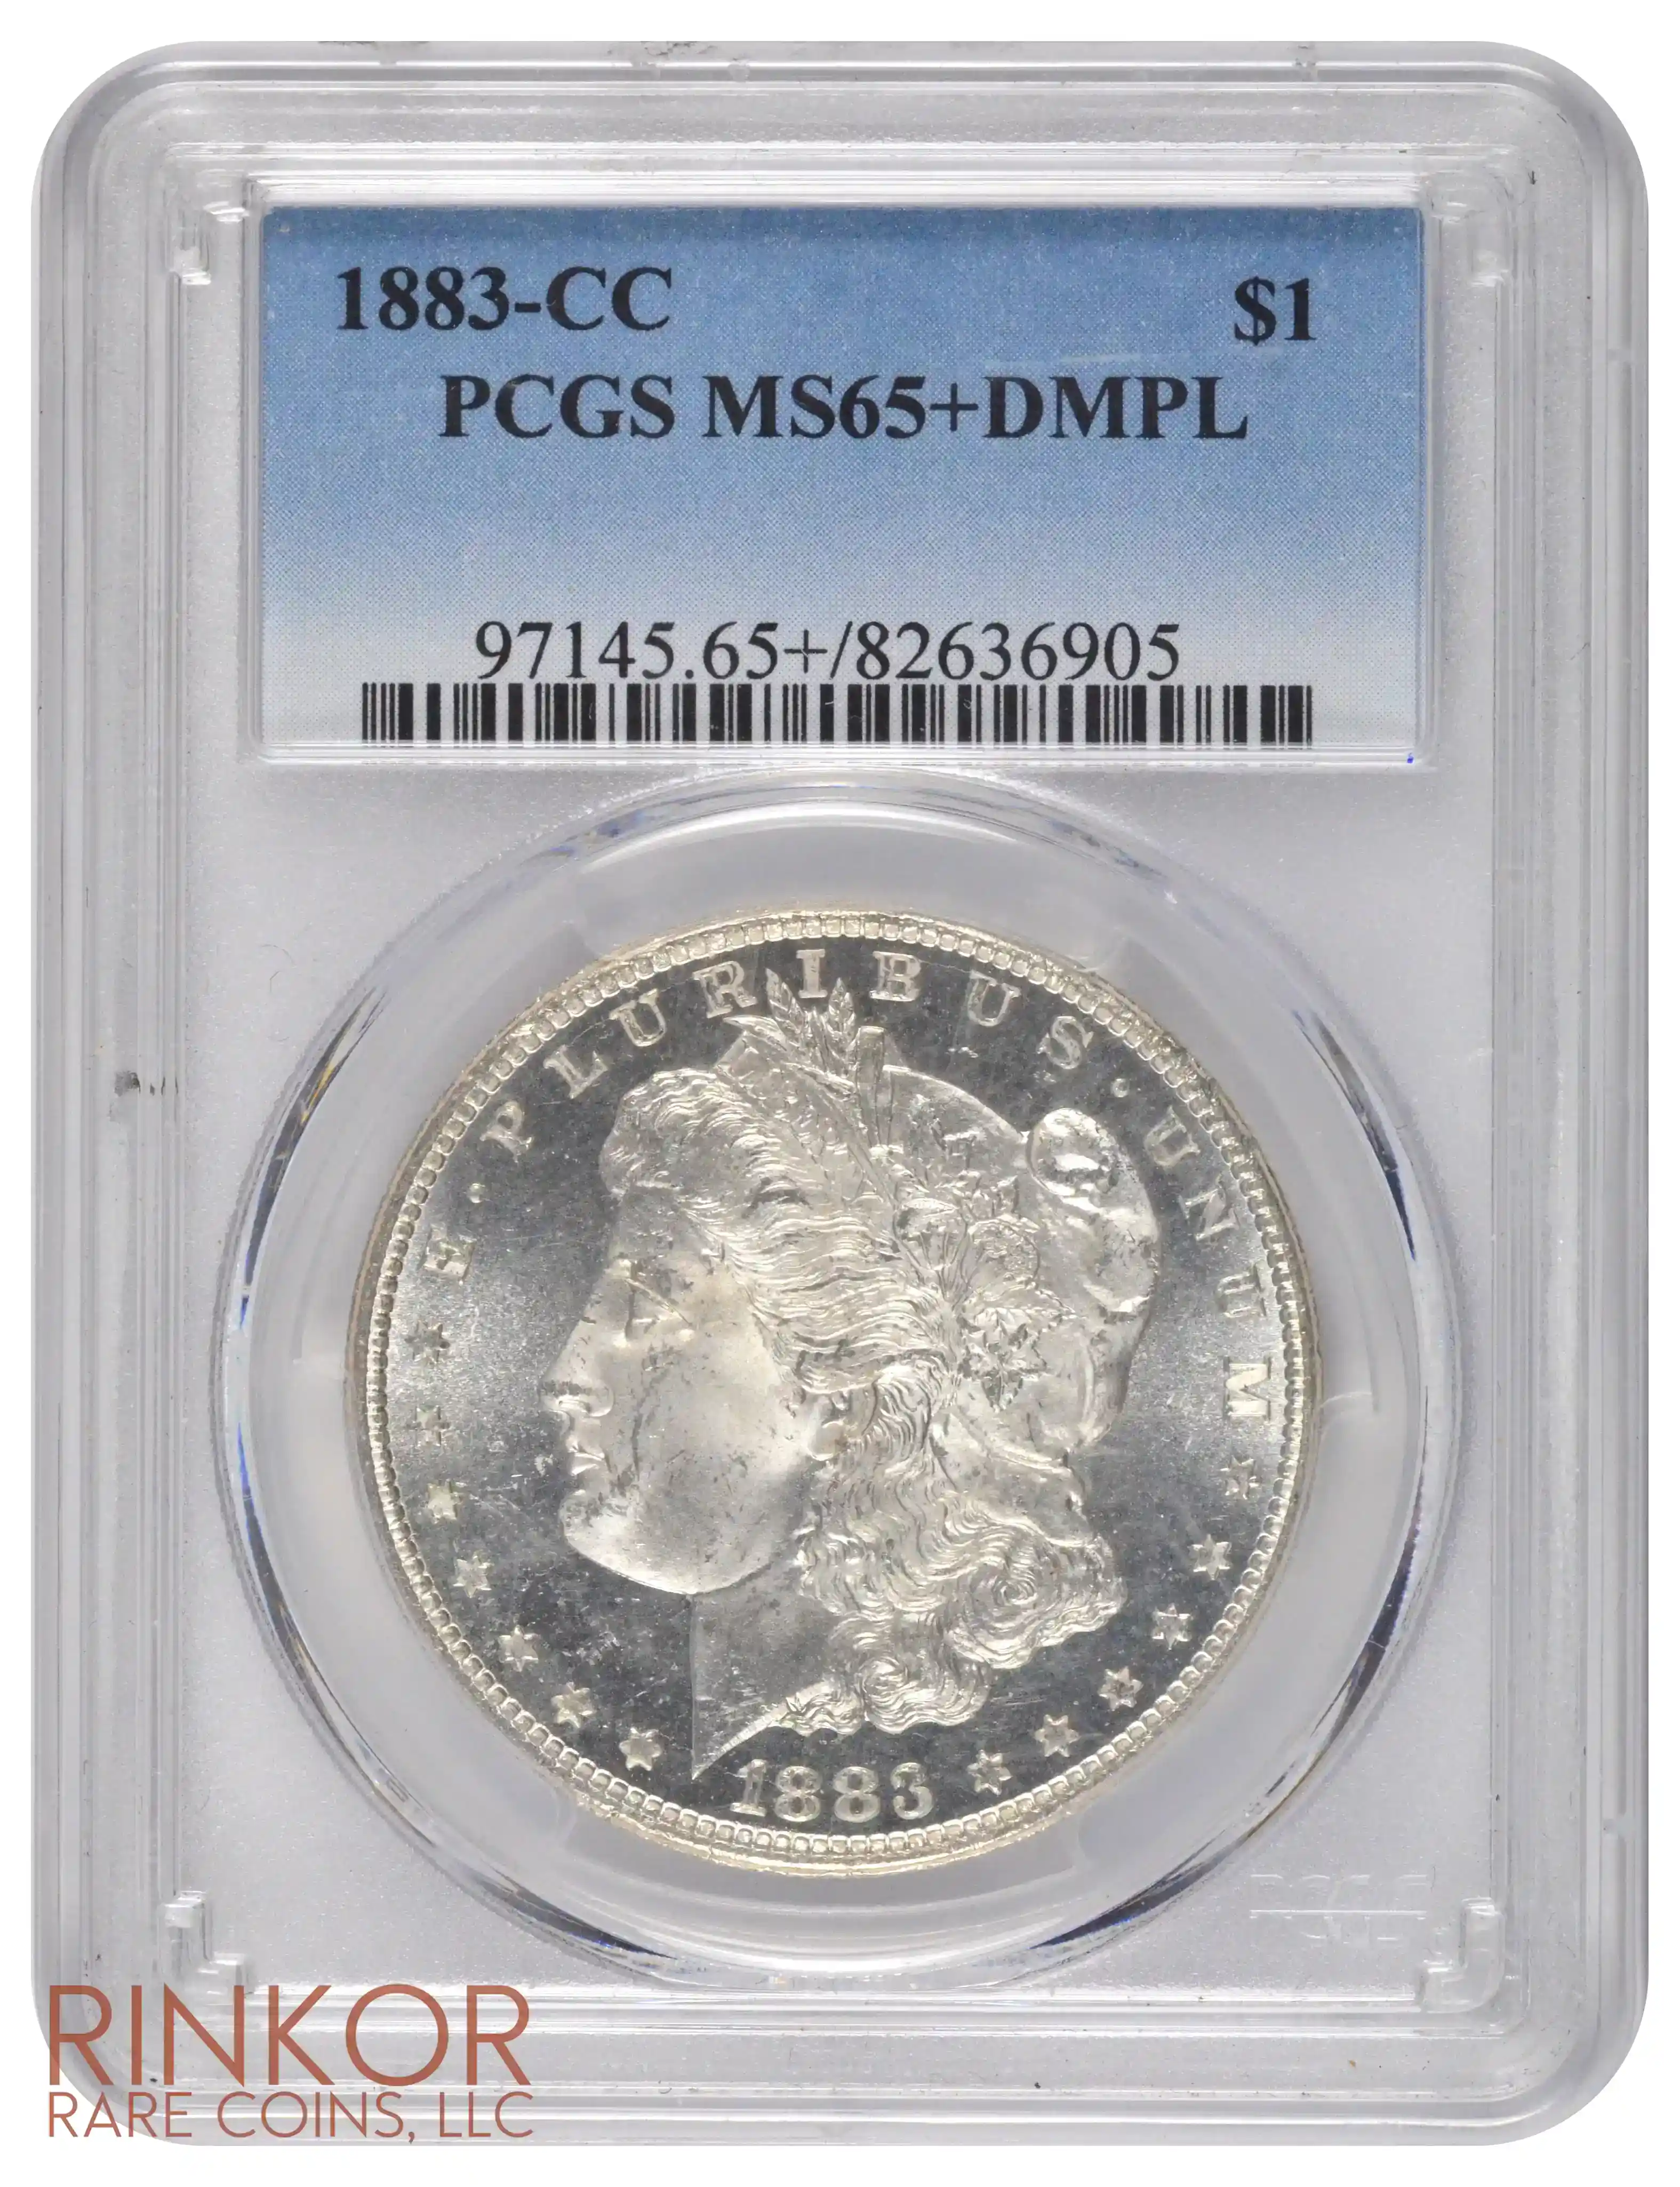 1883-CC $1 PCGS MS 65+ DMPL